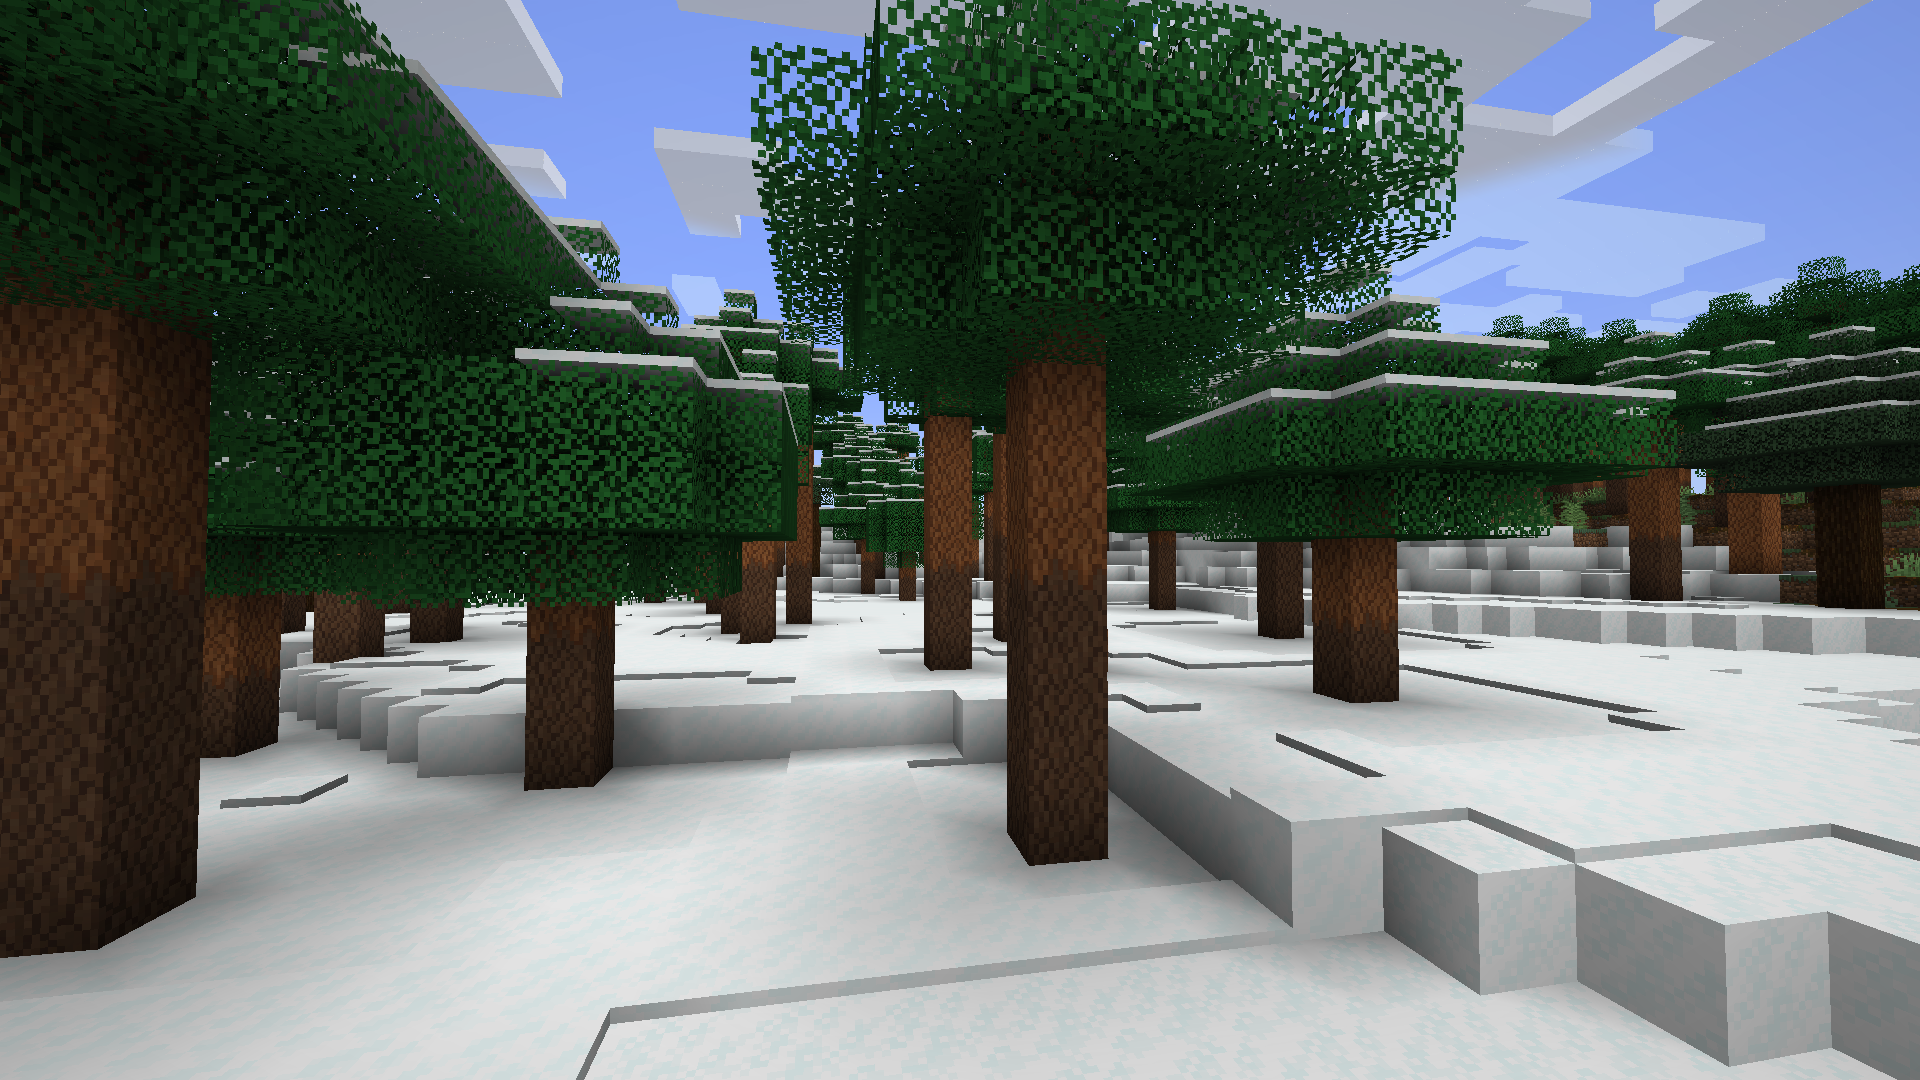 Snowy pine forest (2.0)